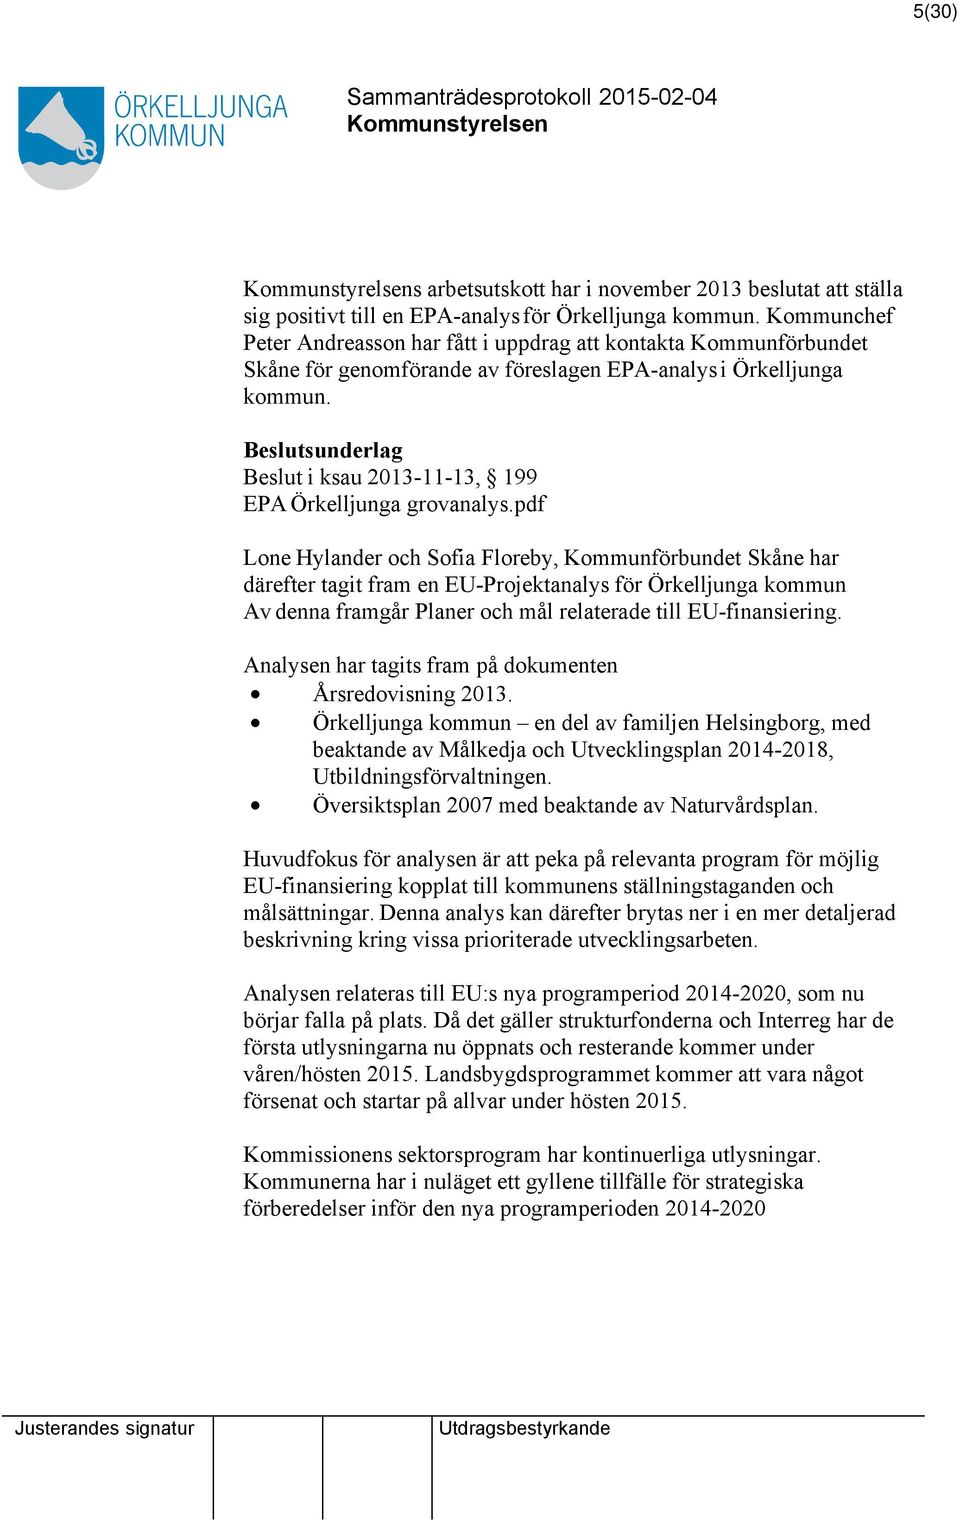 Beslutsunderlag Beslut i ksau 2013-11-13, 199 EPA Örkelljunga grovanalys.